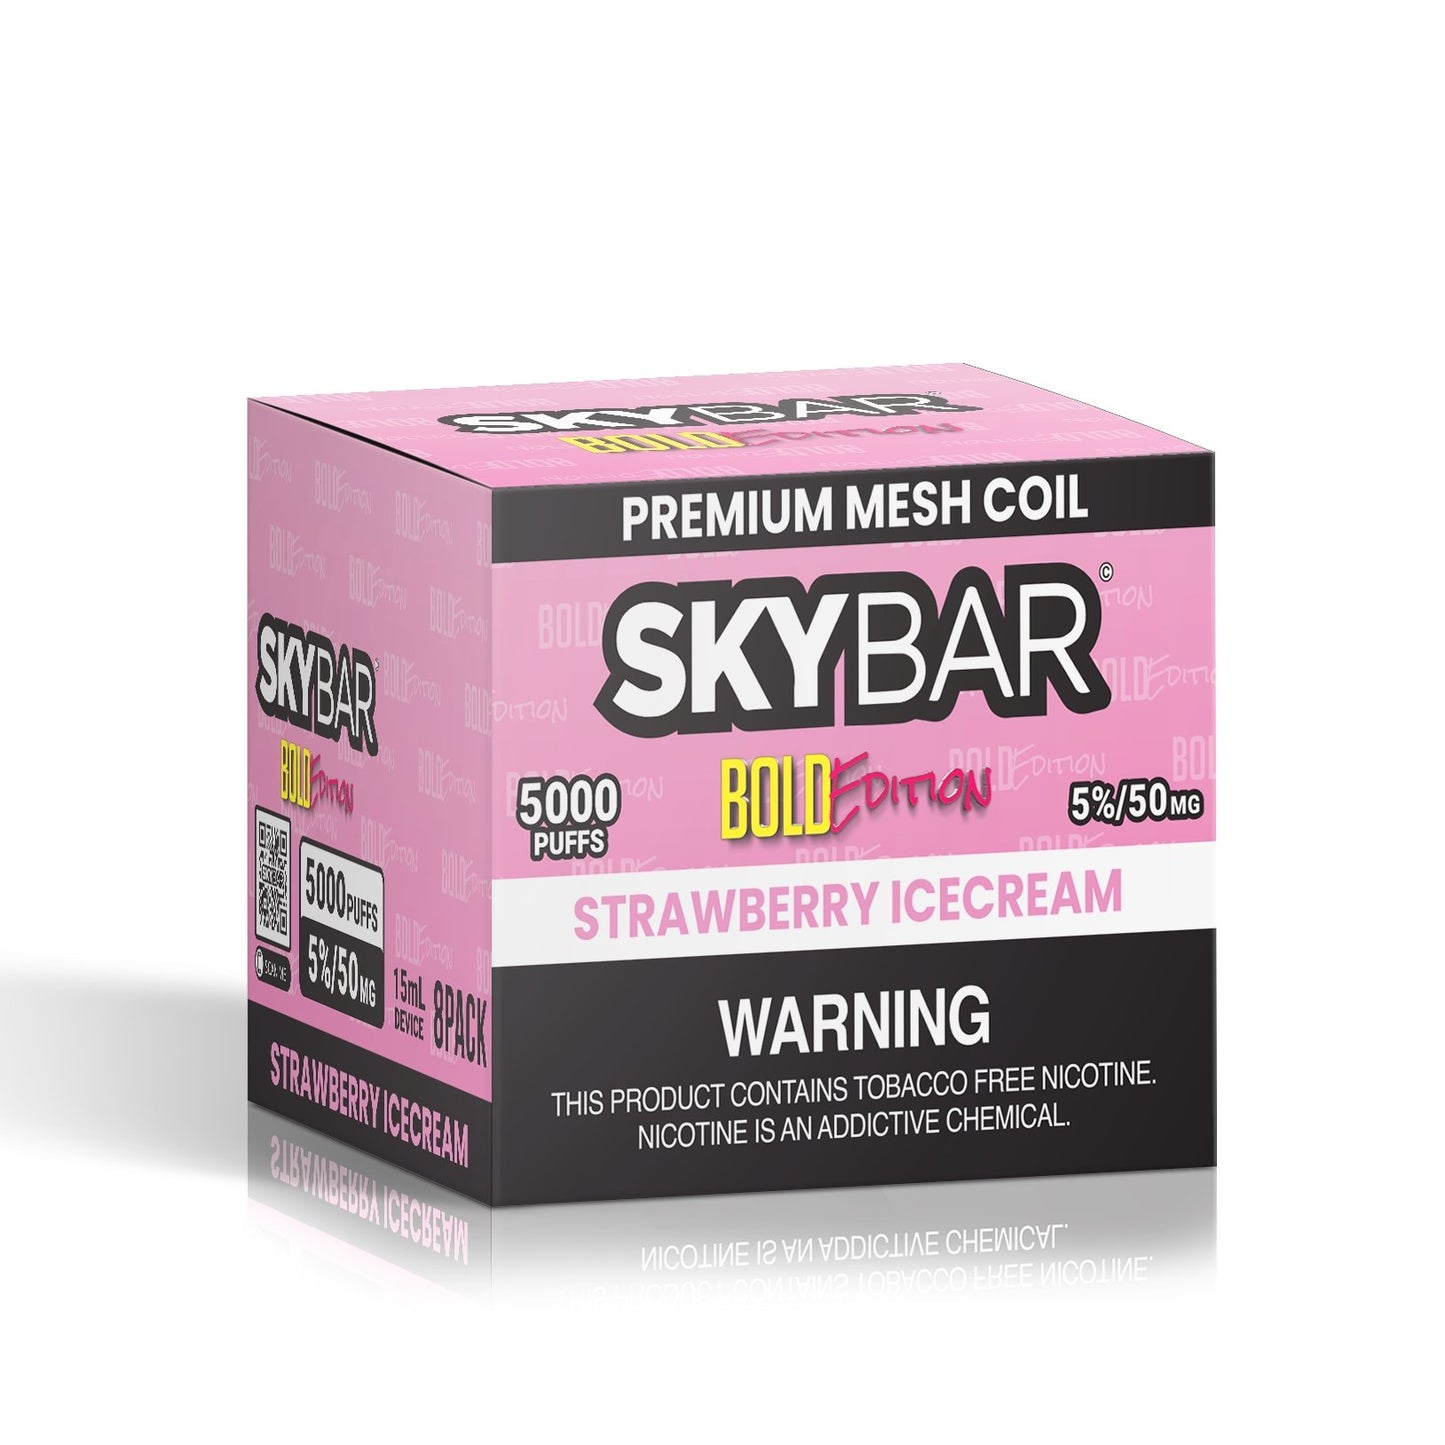 Skybar Lemon Mint | Skybar Kiwi Strawberry | SKYBAR